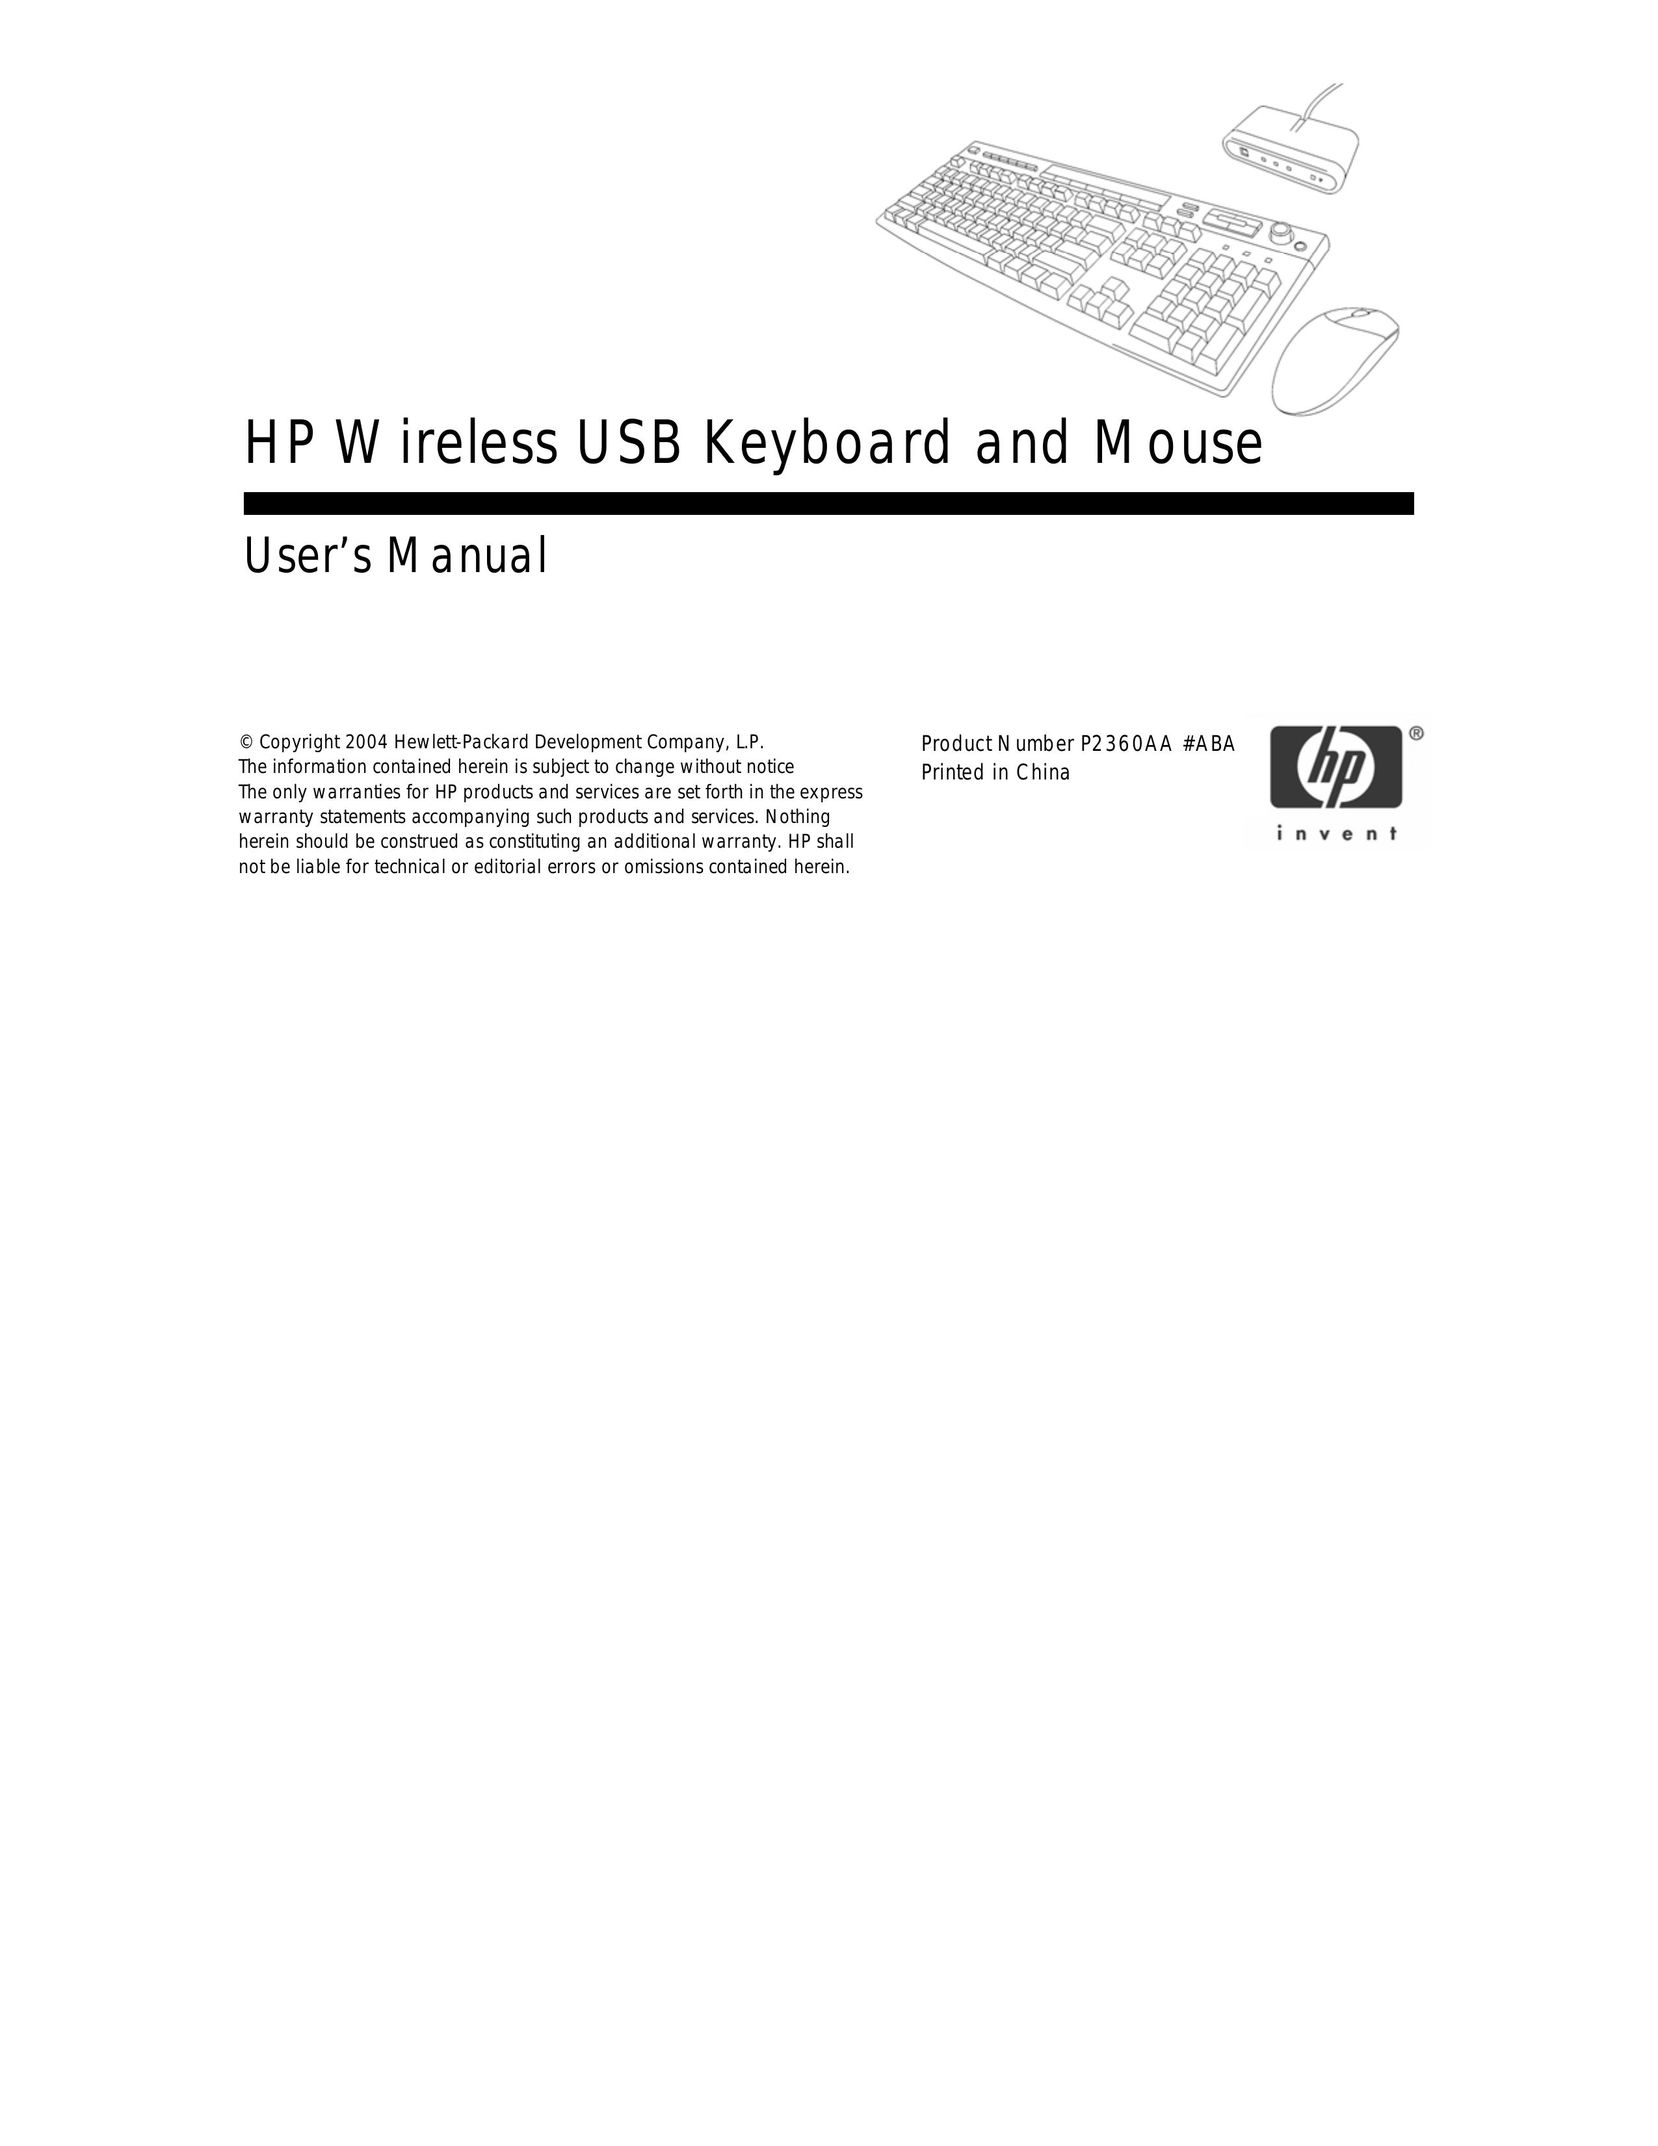 HP (Hewlett-Packard) P2360AA #ABA Mouse User Manual